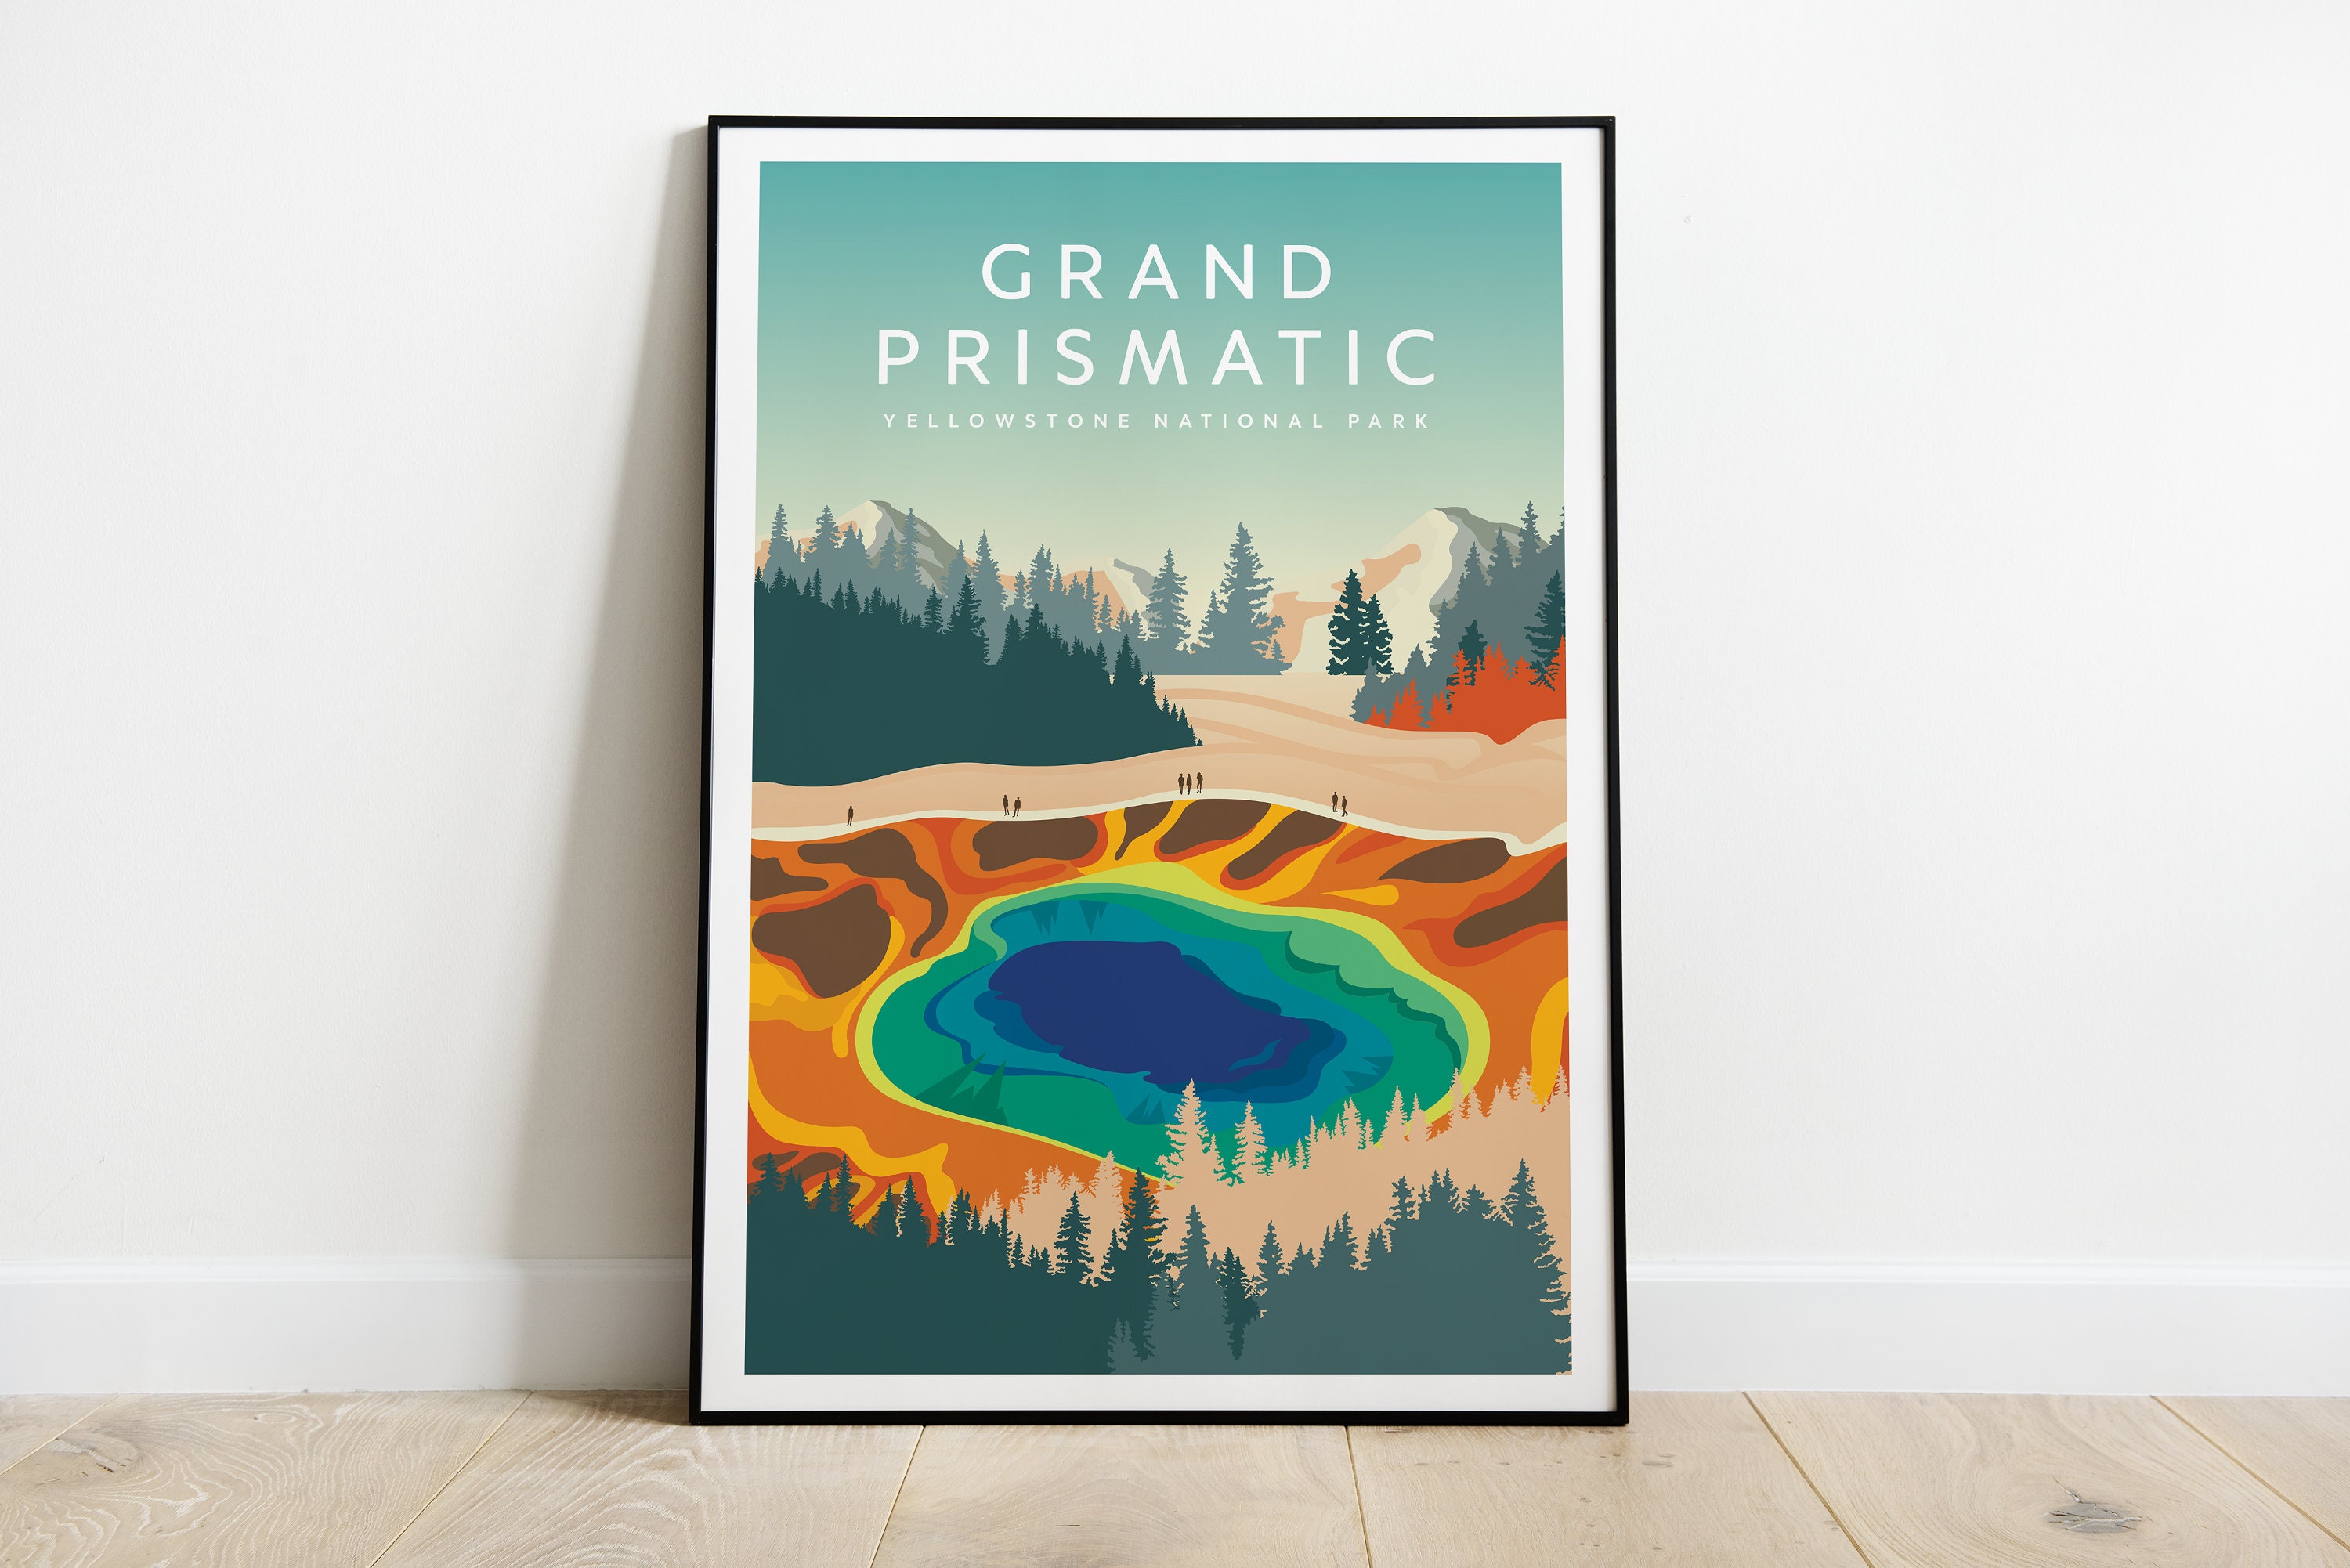 Color Prismatic Chart Poster – Kuriosis